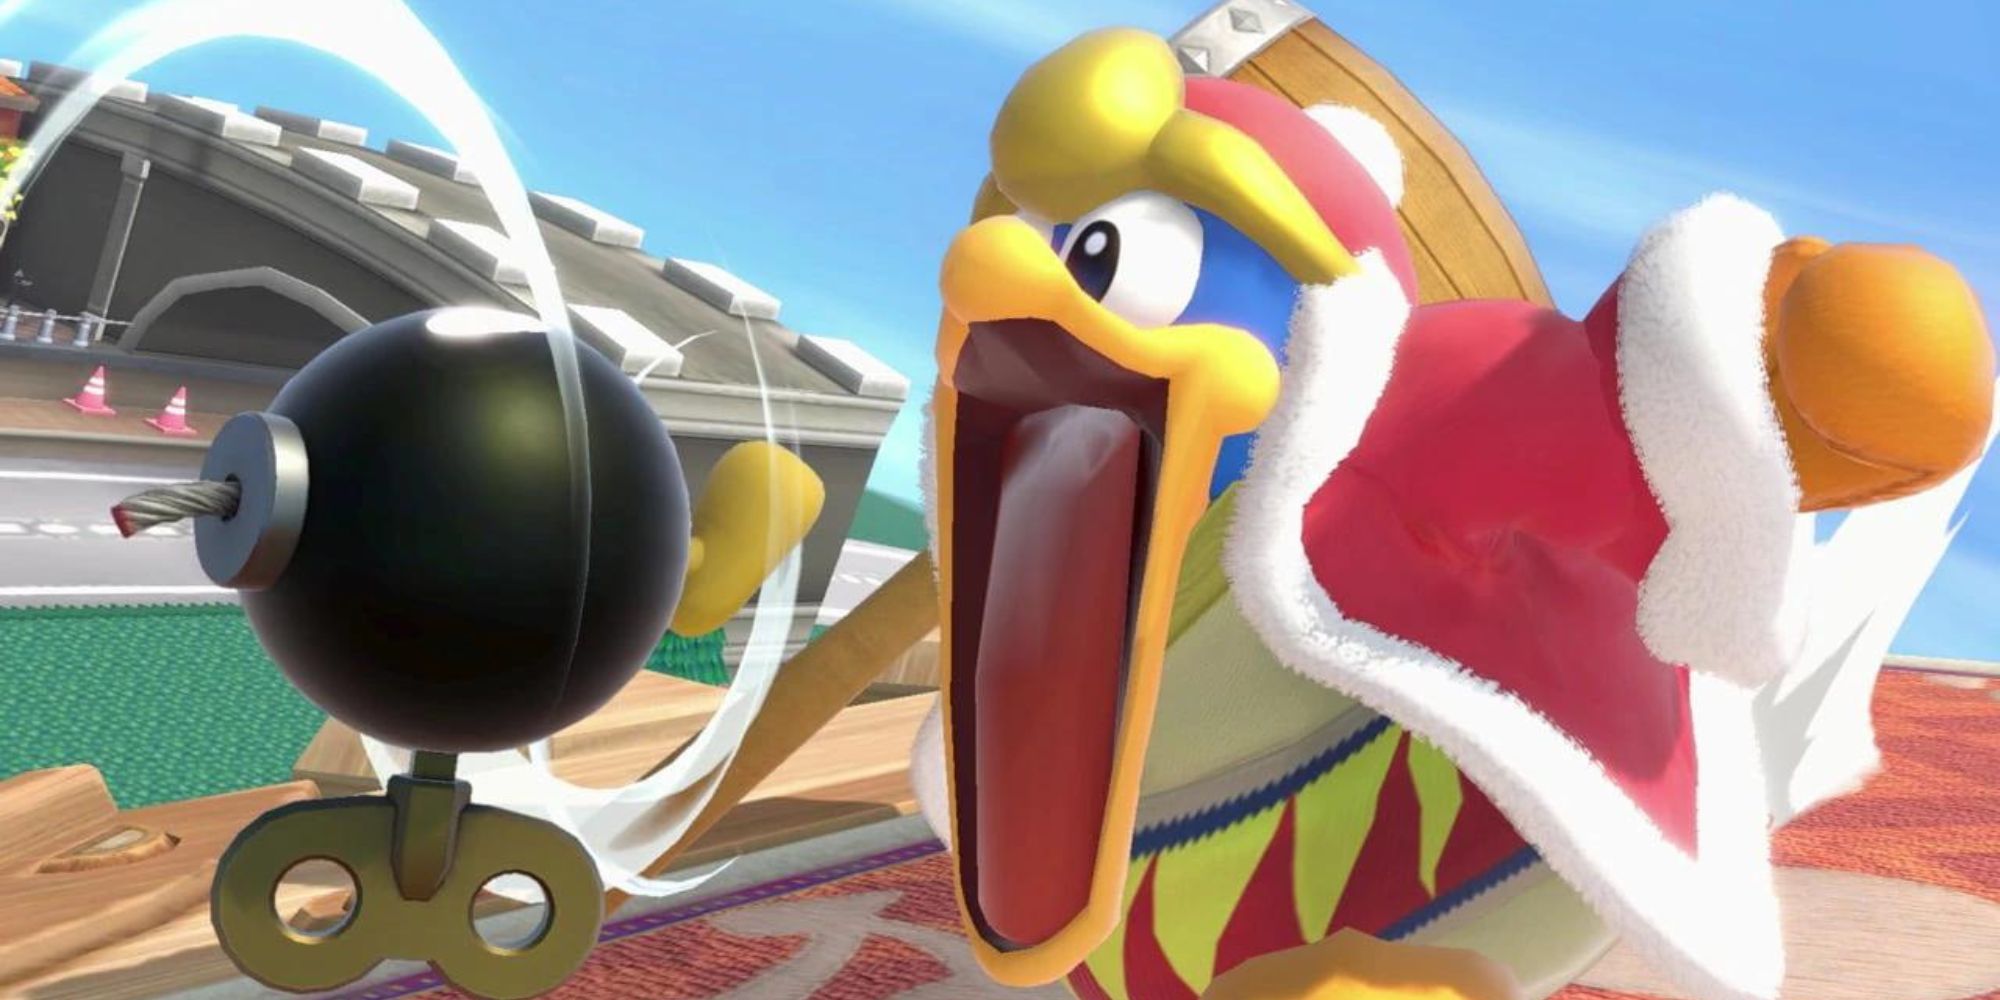 King Dedede inhales a bob-omb on the Mario Kart stage in Super Smash Bros.